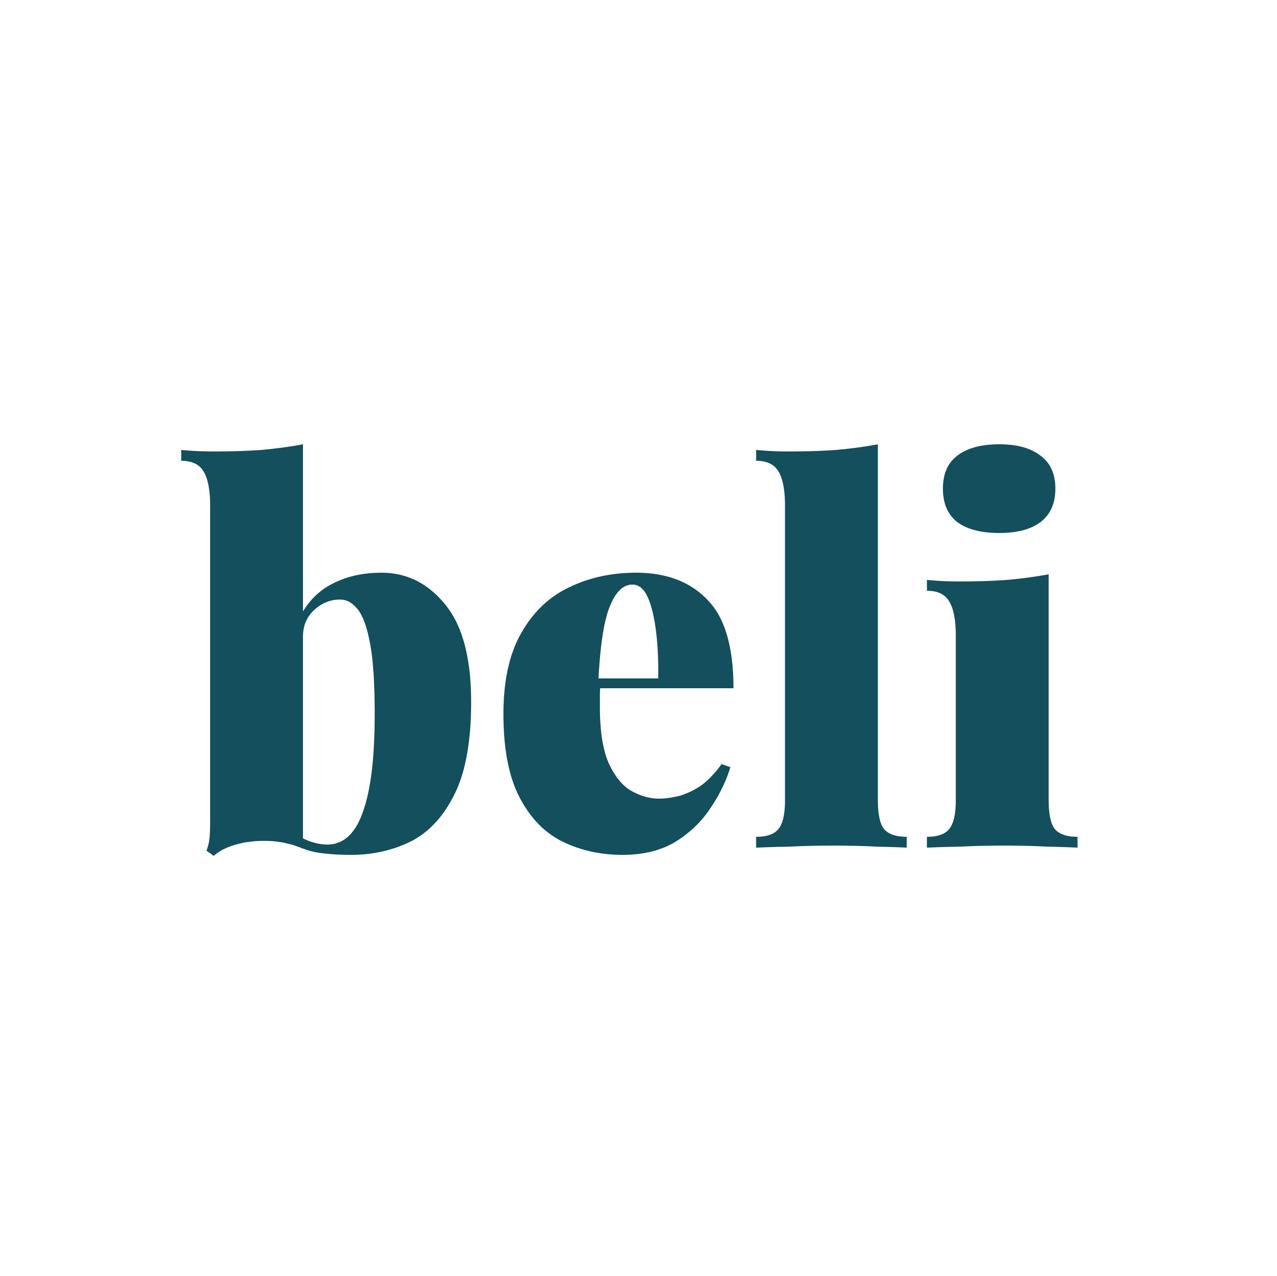 Beli App's images